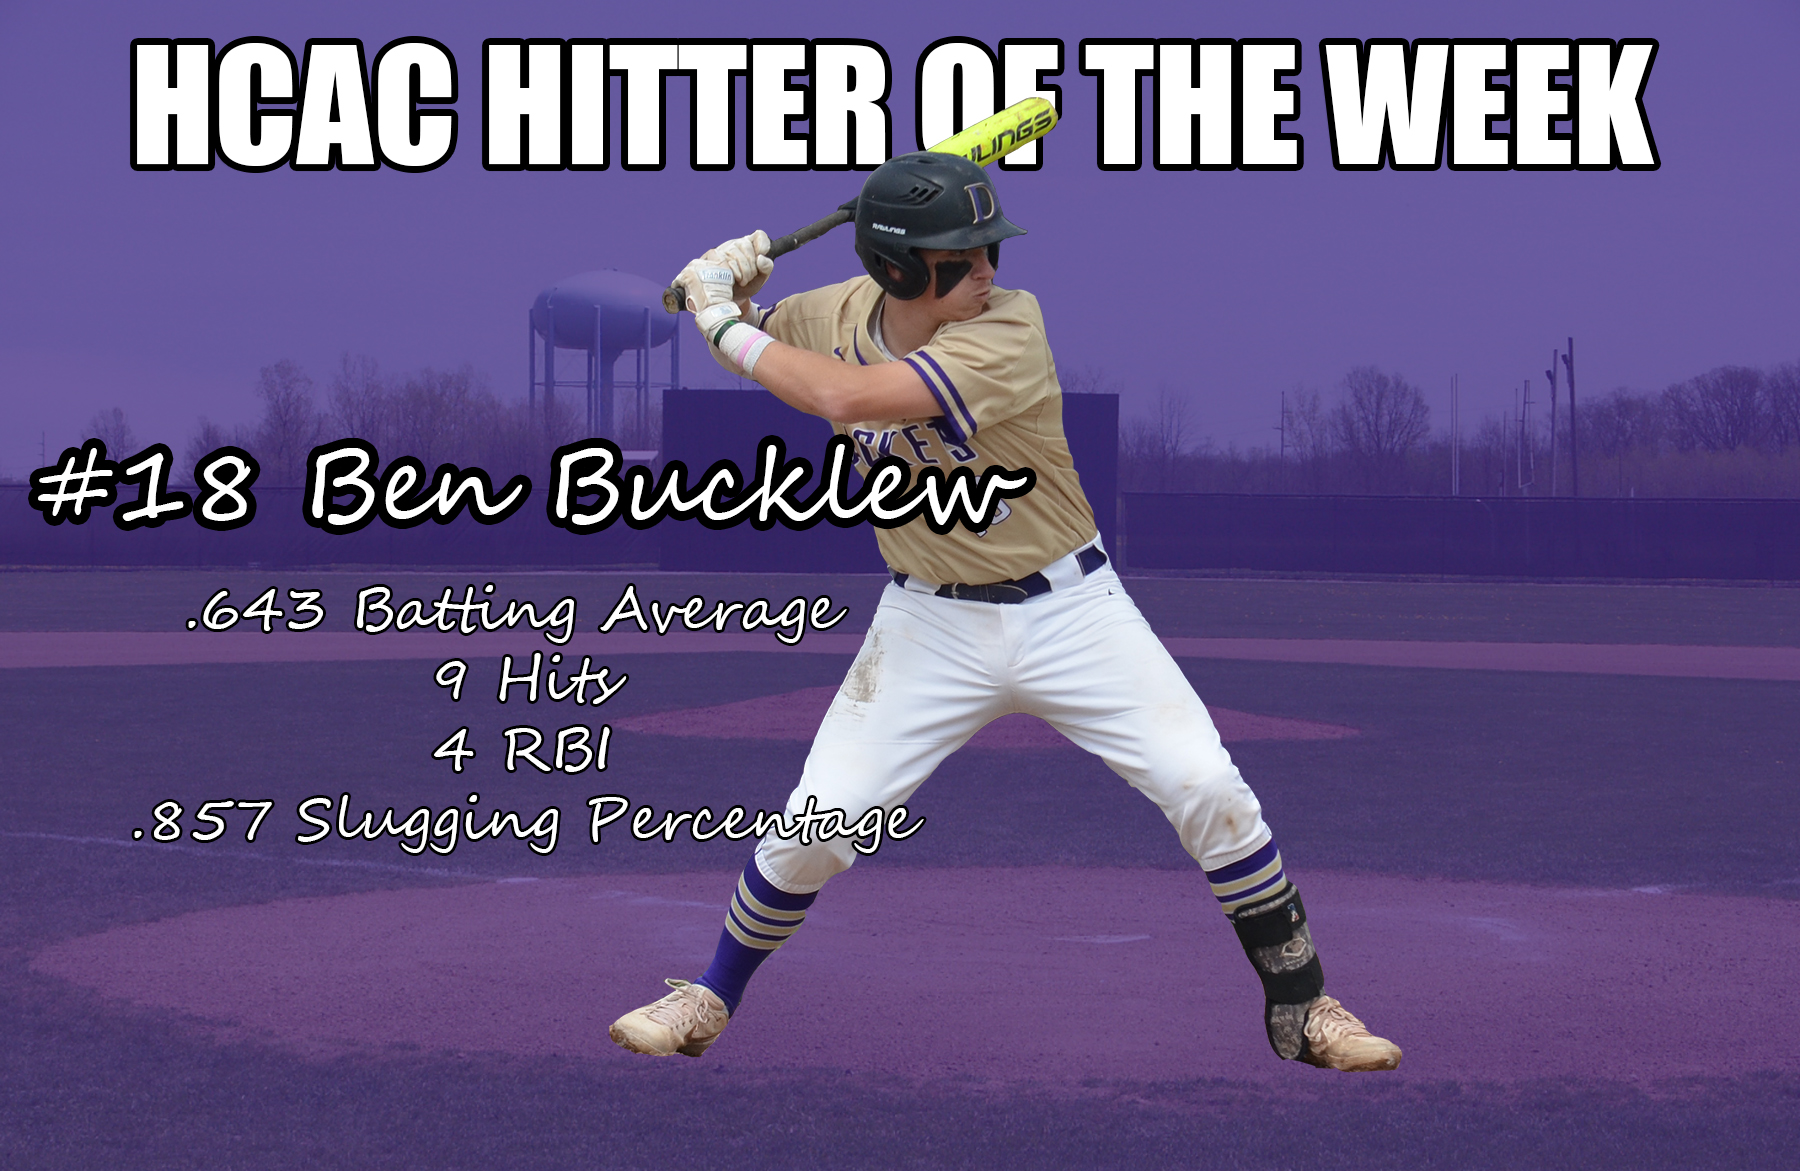 Bucklew Tabbed as HCAC Hitter of the Week